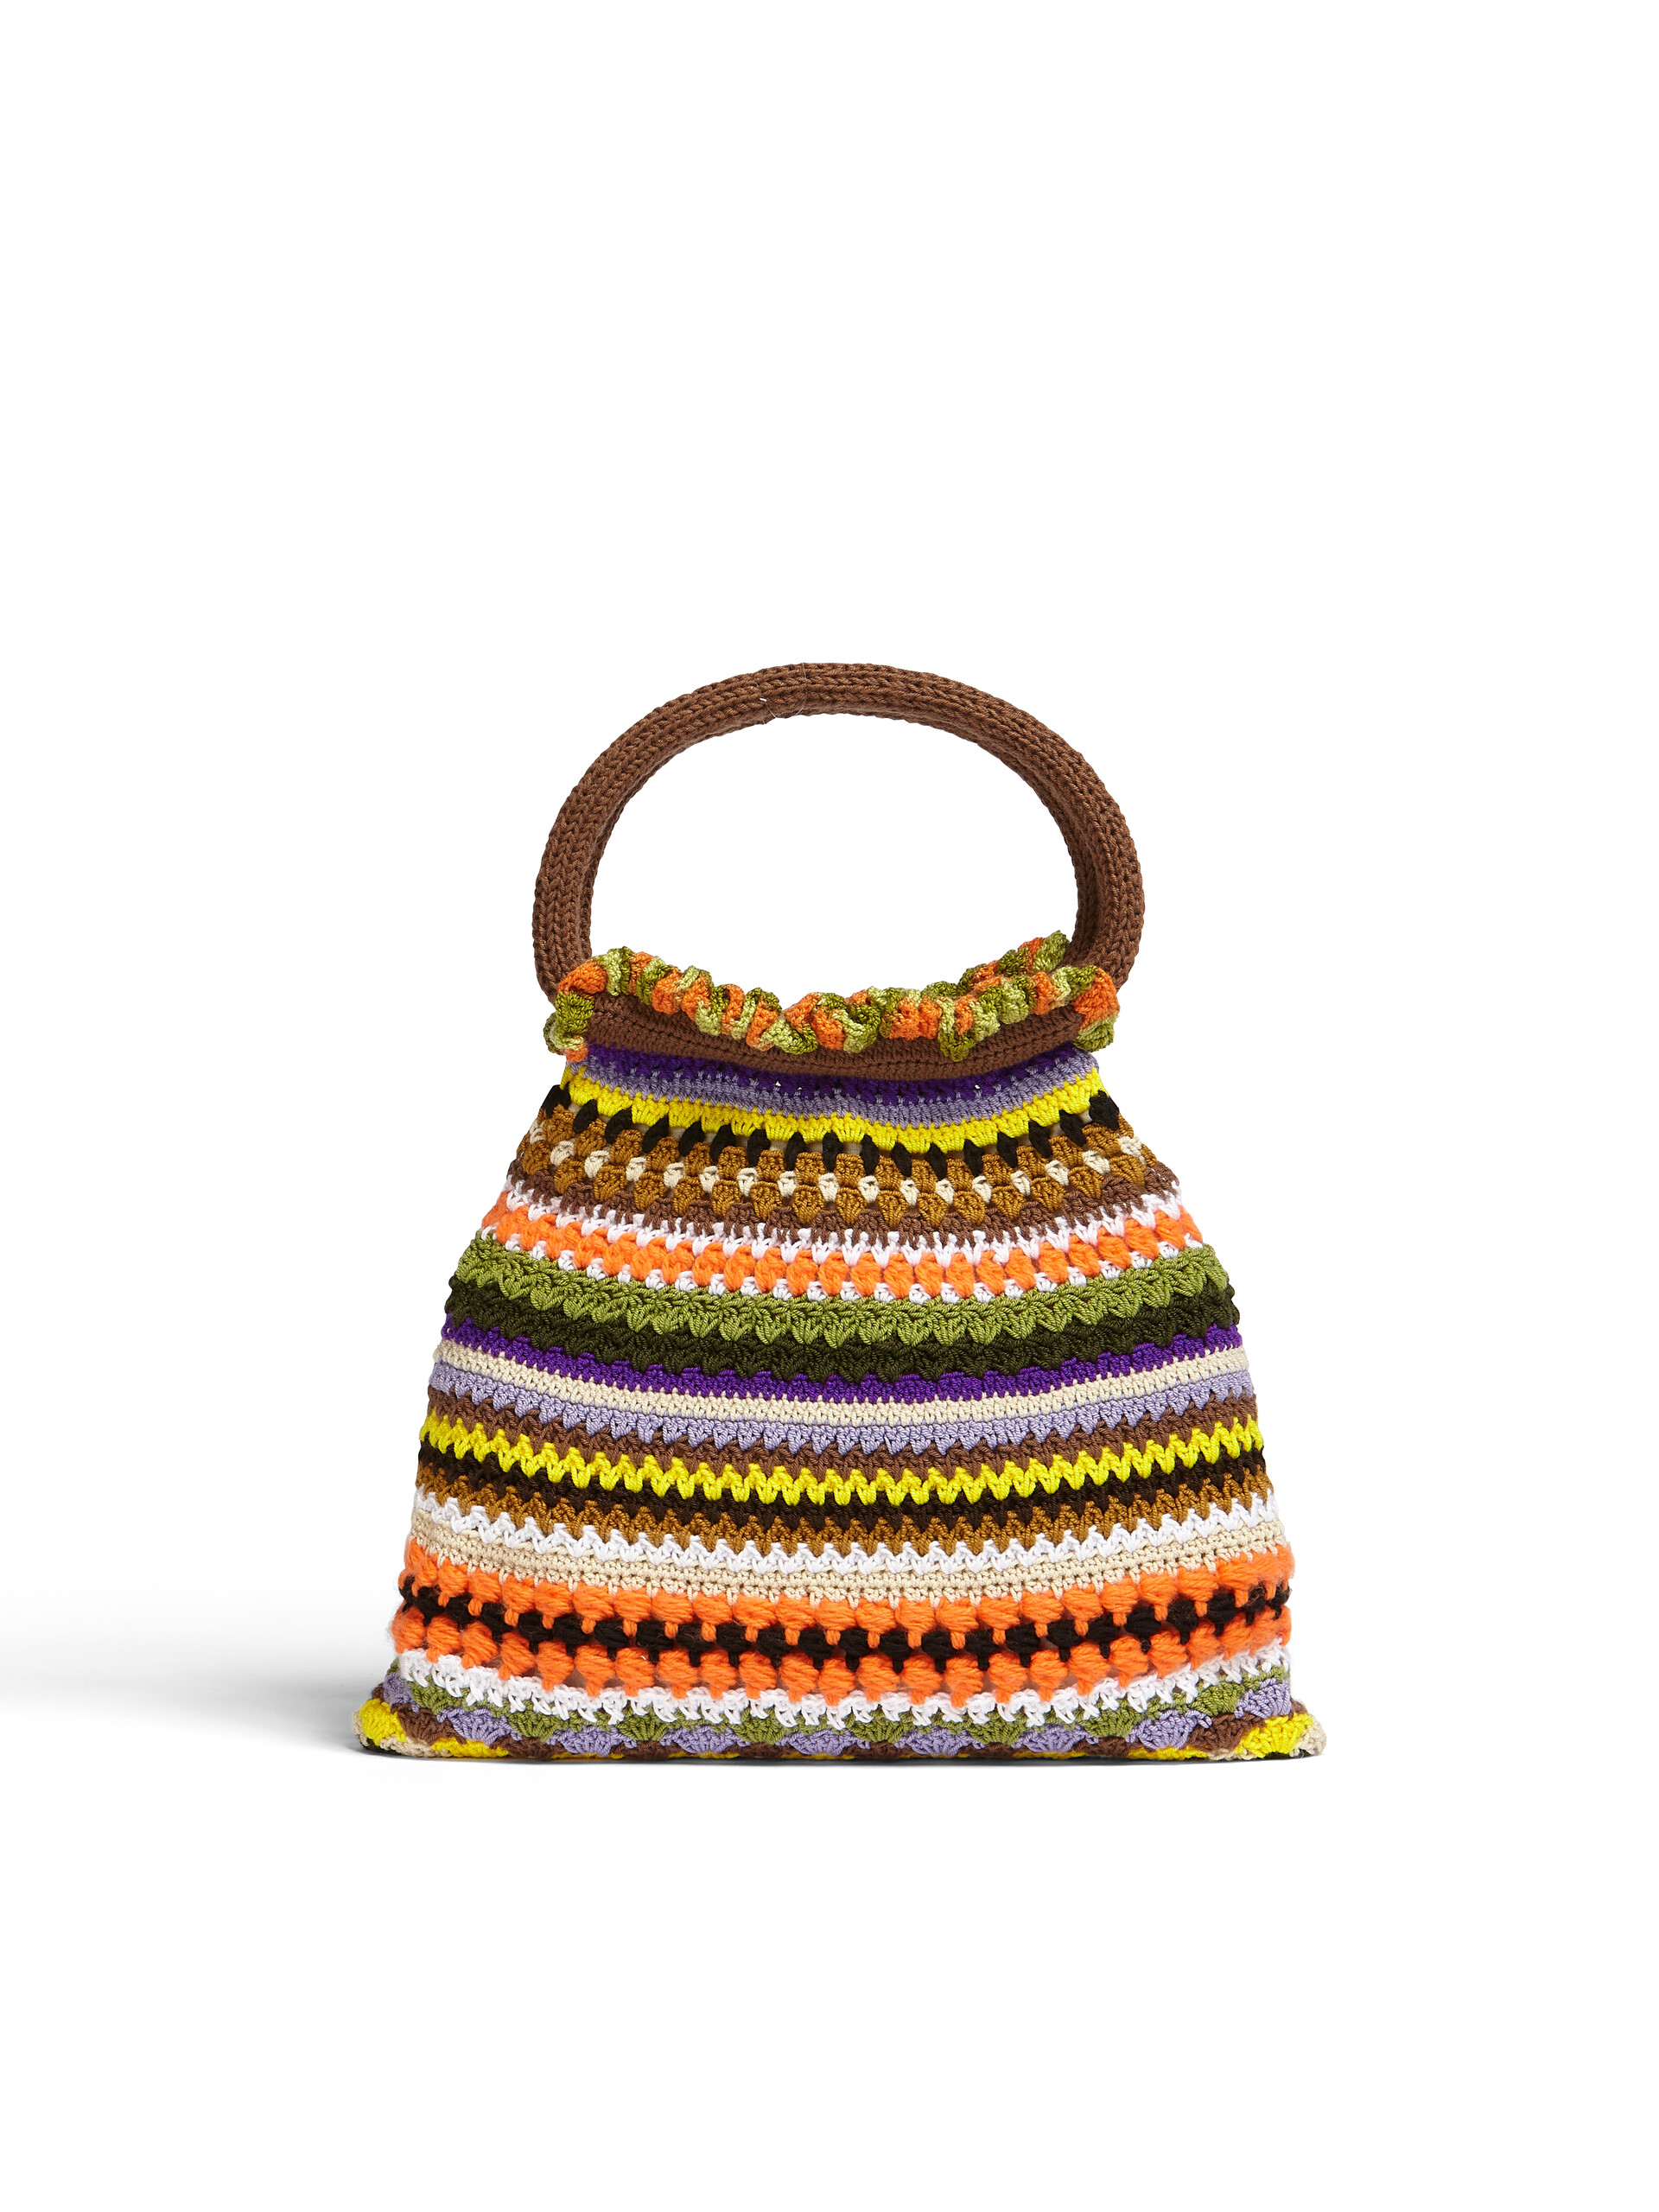 MARNI MARKET GRANNY bag in brown crochet - Bags - Image 3